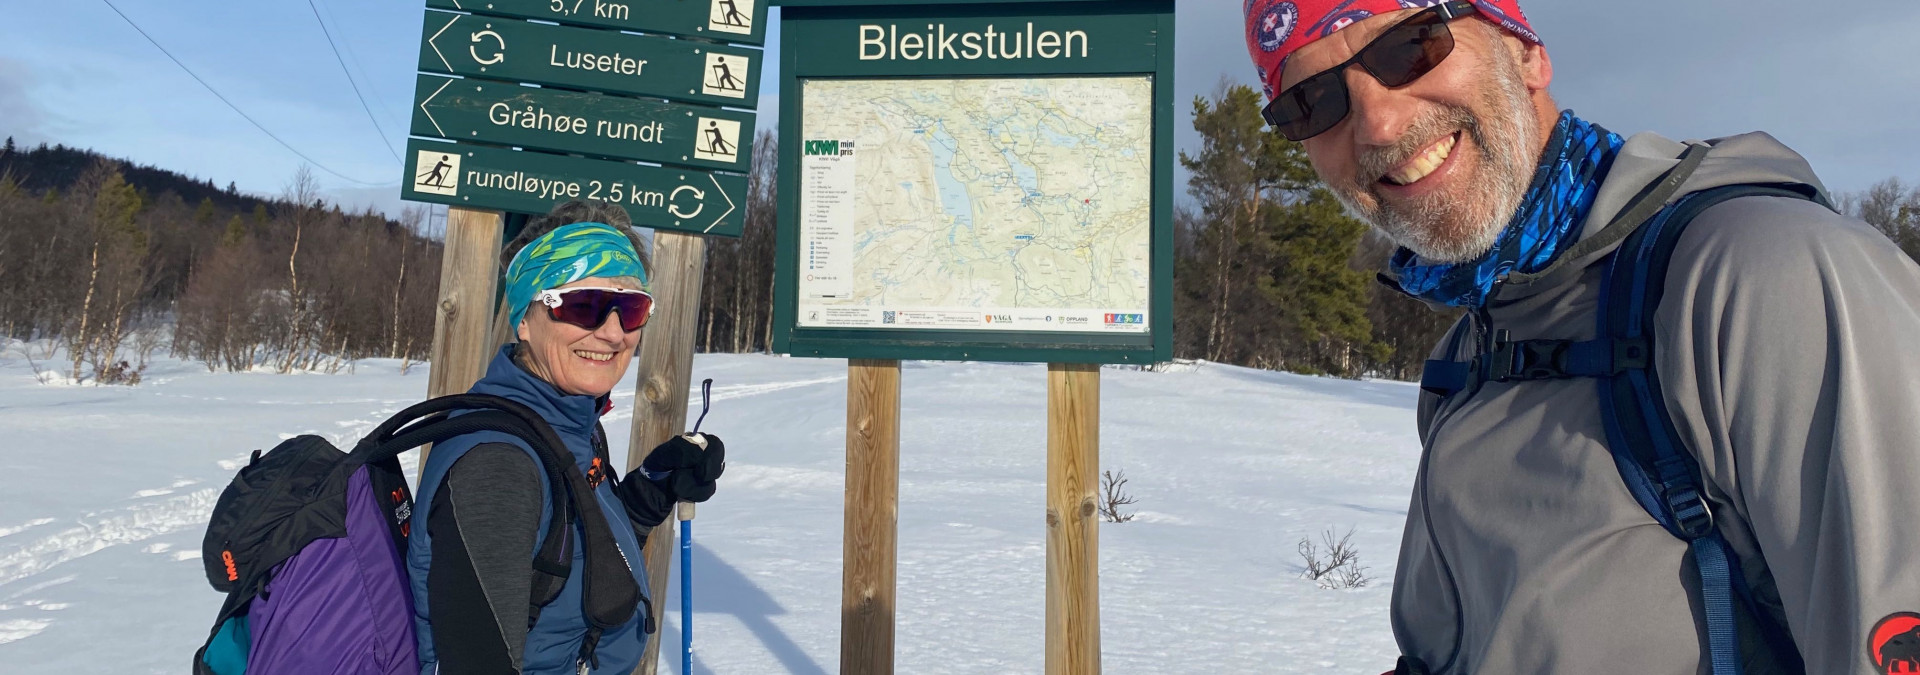 The Jotunheim Ski Trail